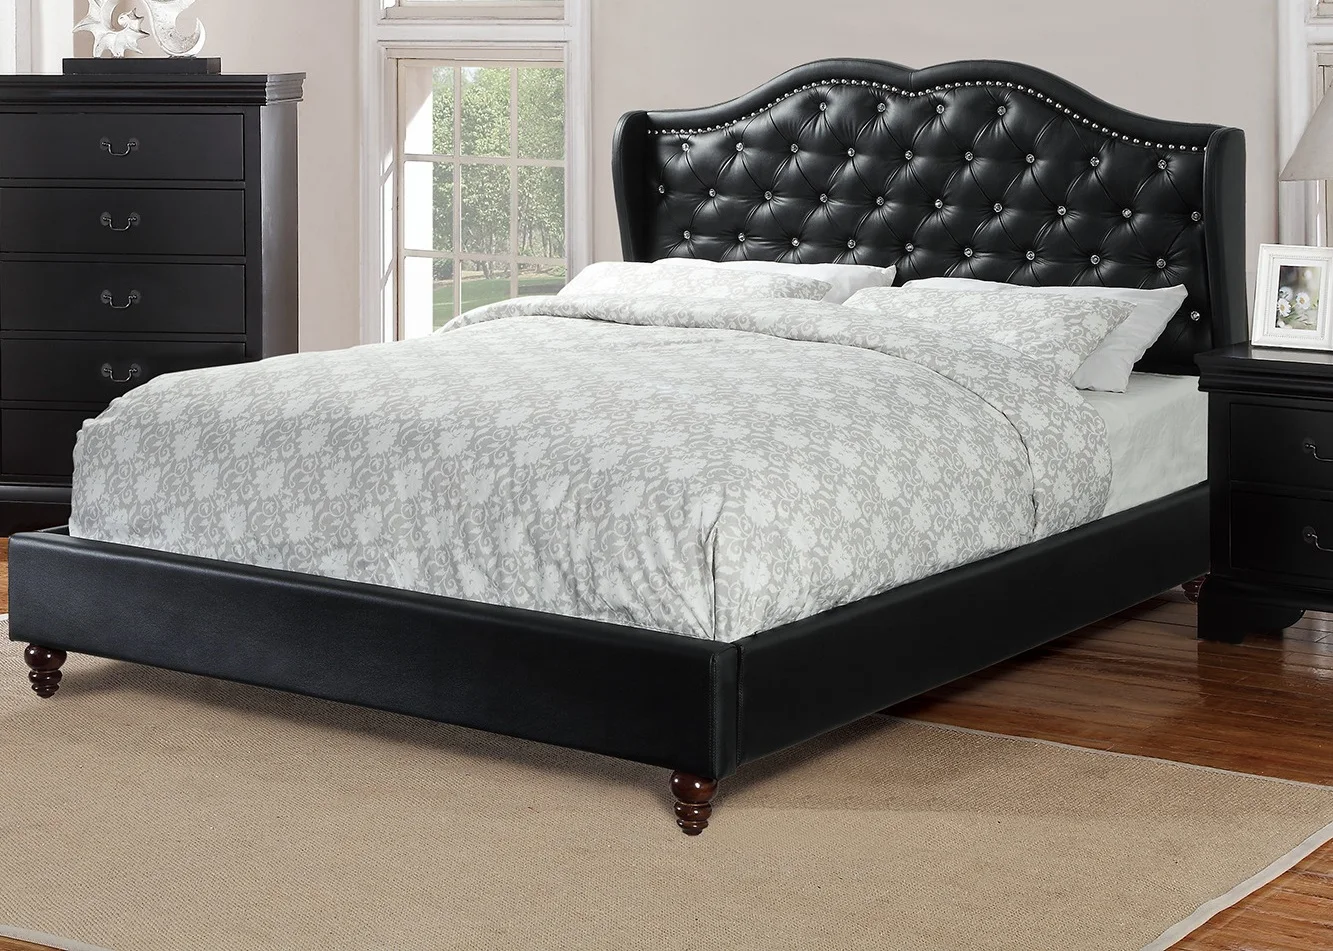 

Queen Size Bed 1pc Bed Set Black Faux Leather Upholstered Wingback Design Bed Frame Headboard Bedroom Furniture Tufted Upholster